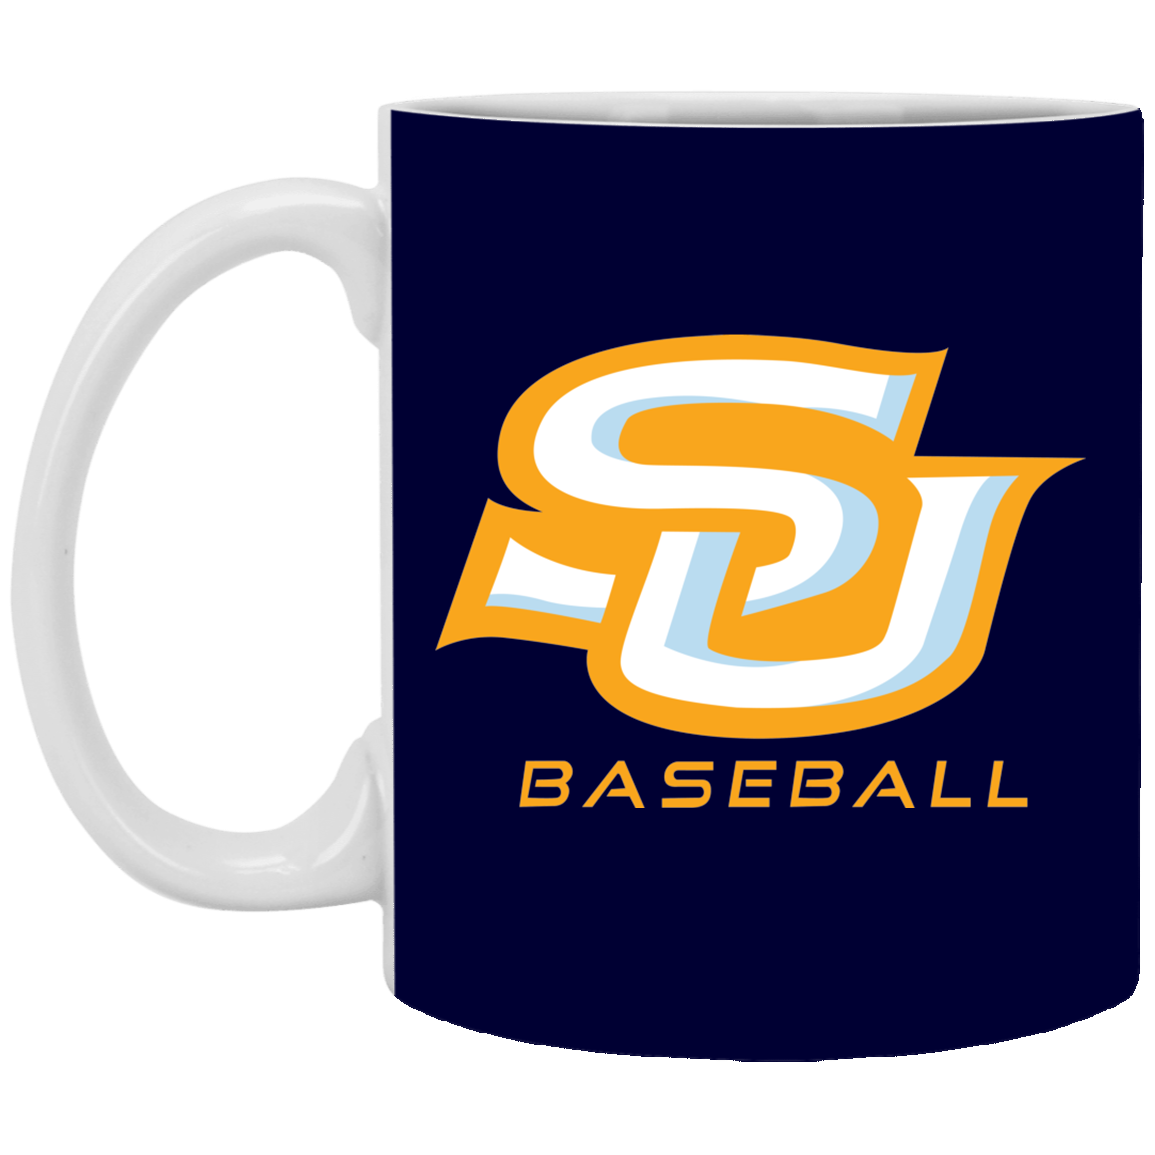 SU Baseball Gold XP8434 11 oz. White Mug